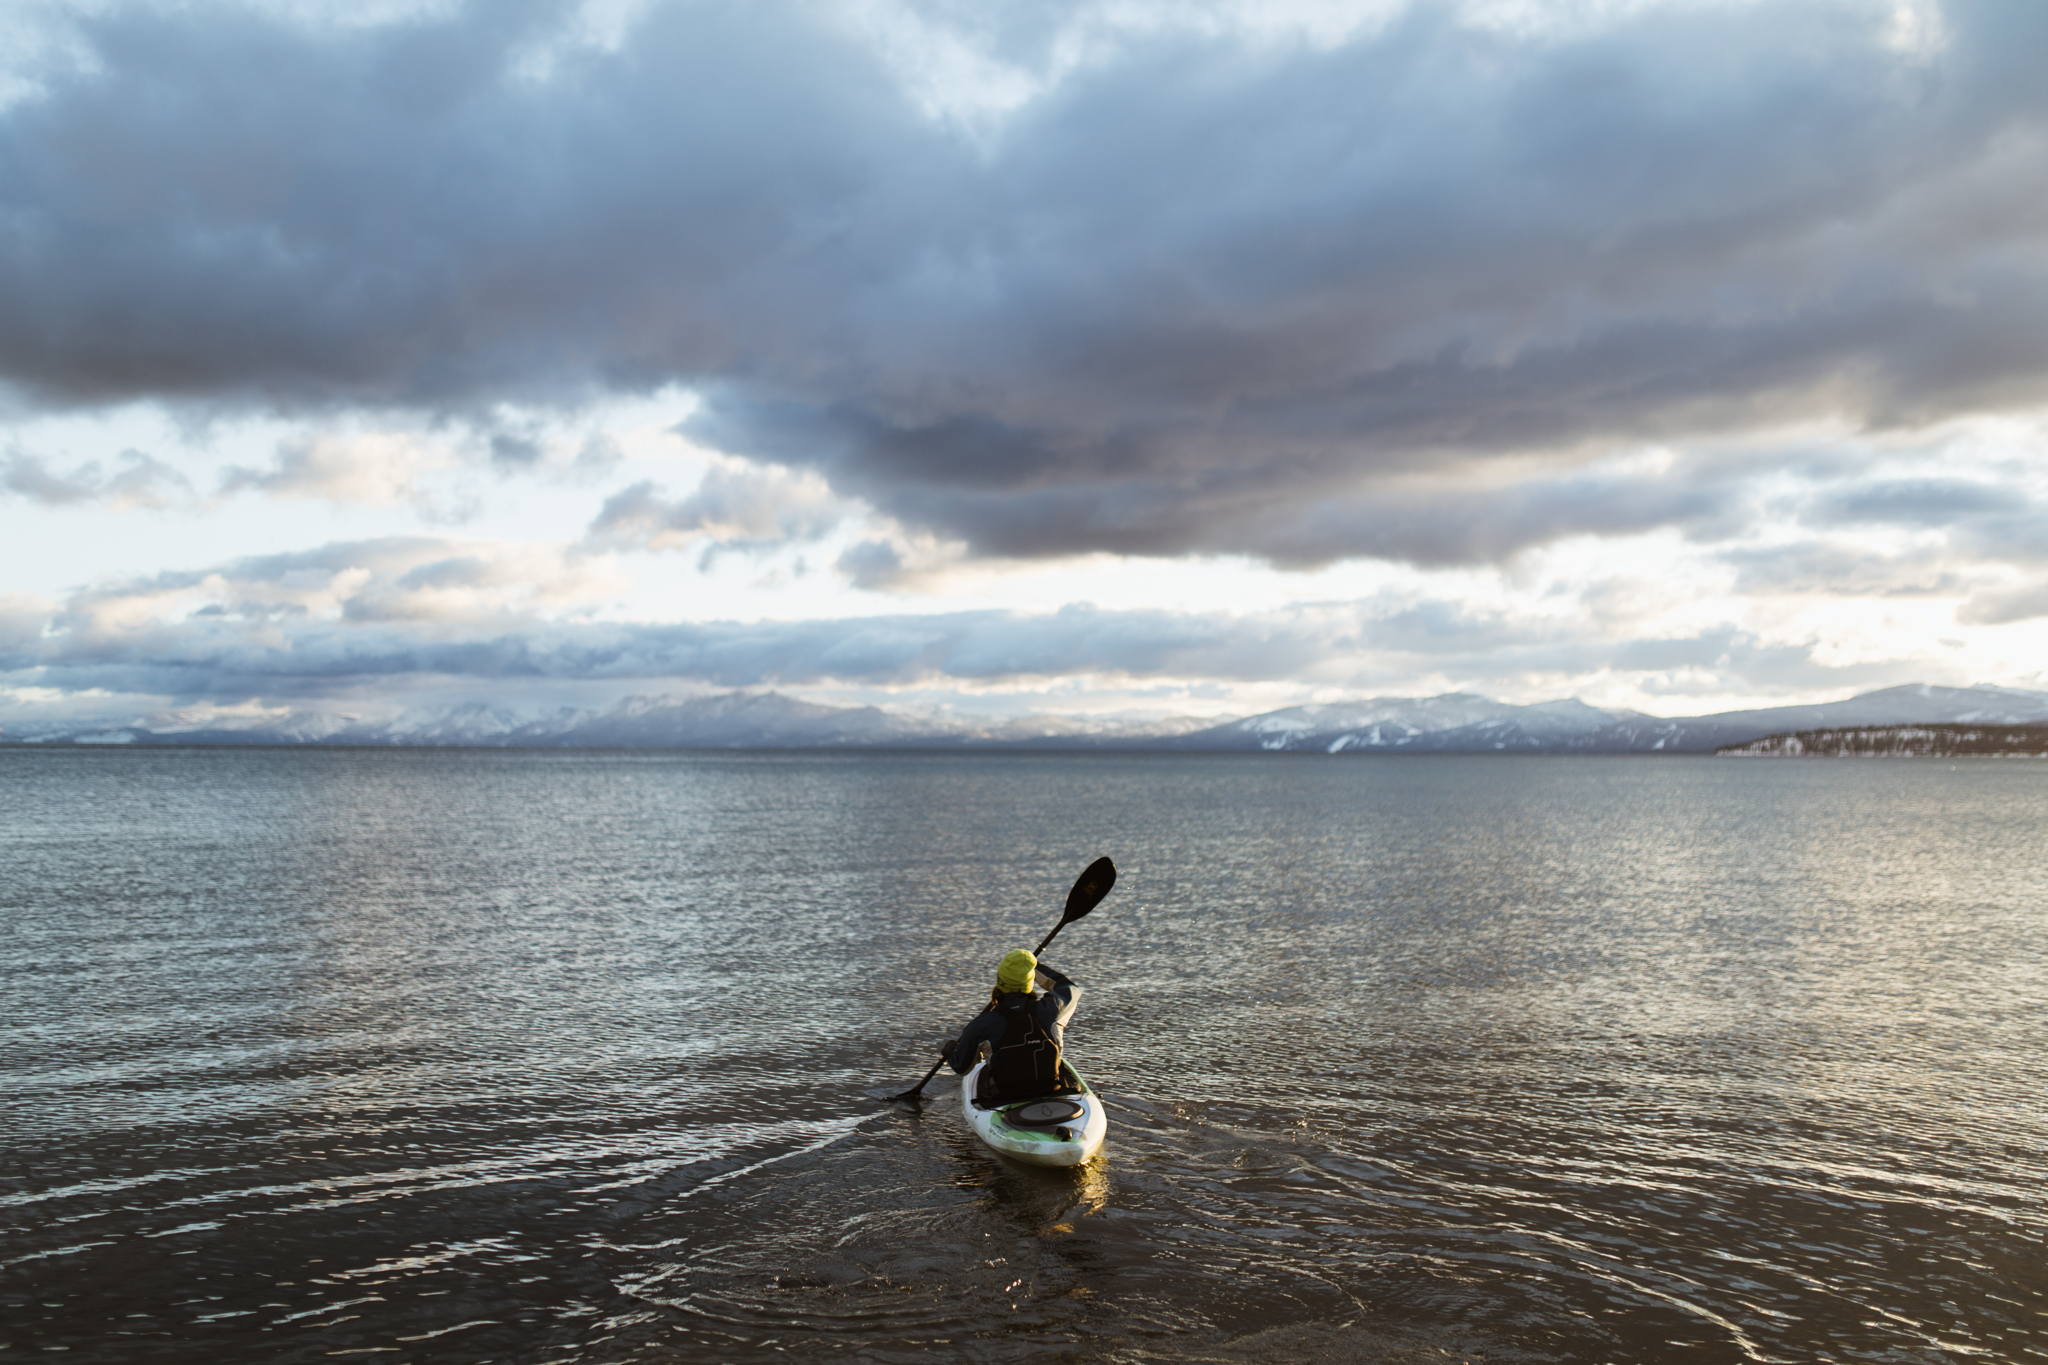 kayaking on lake tahoe in the snow | utah and california adventure elopement photographers | the hearnes adventure photography | www.thehearnes.com